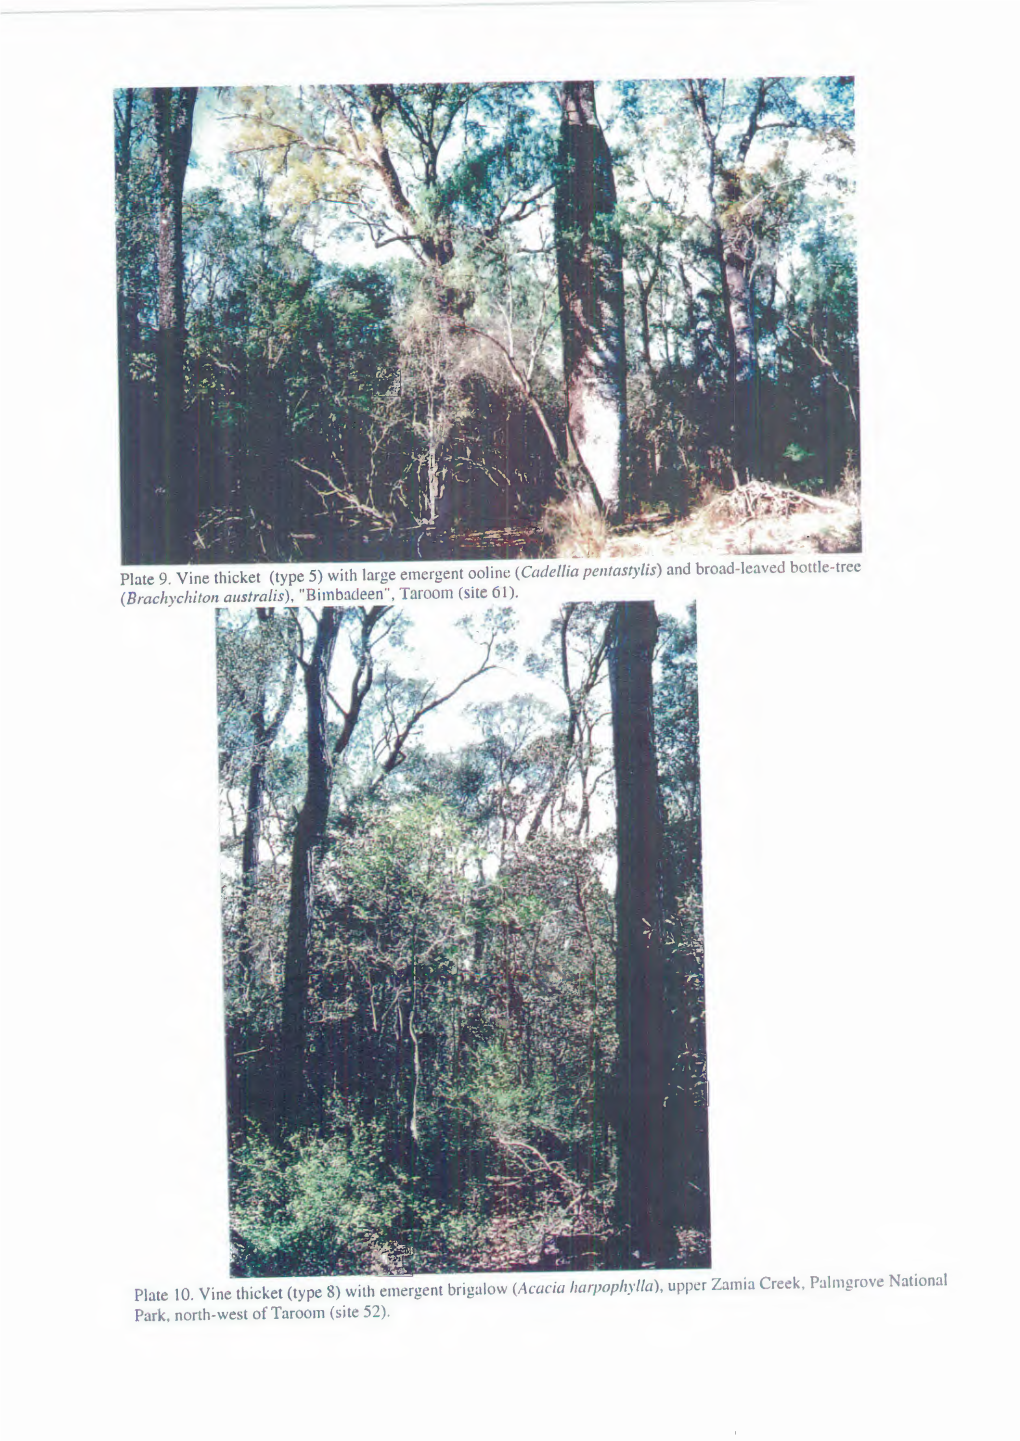 Cadellia Pentastylis) (Brachychiton Australis), "Bimbadeen", Taroom (Site 61)